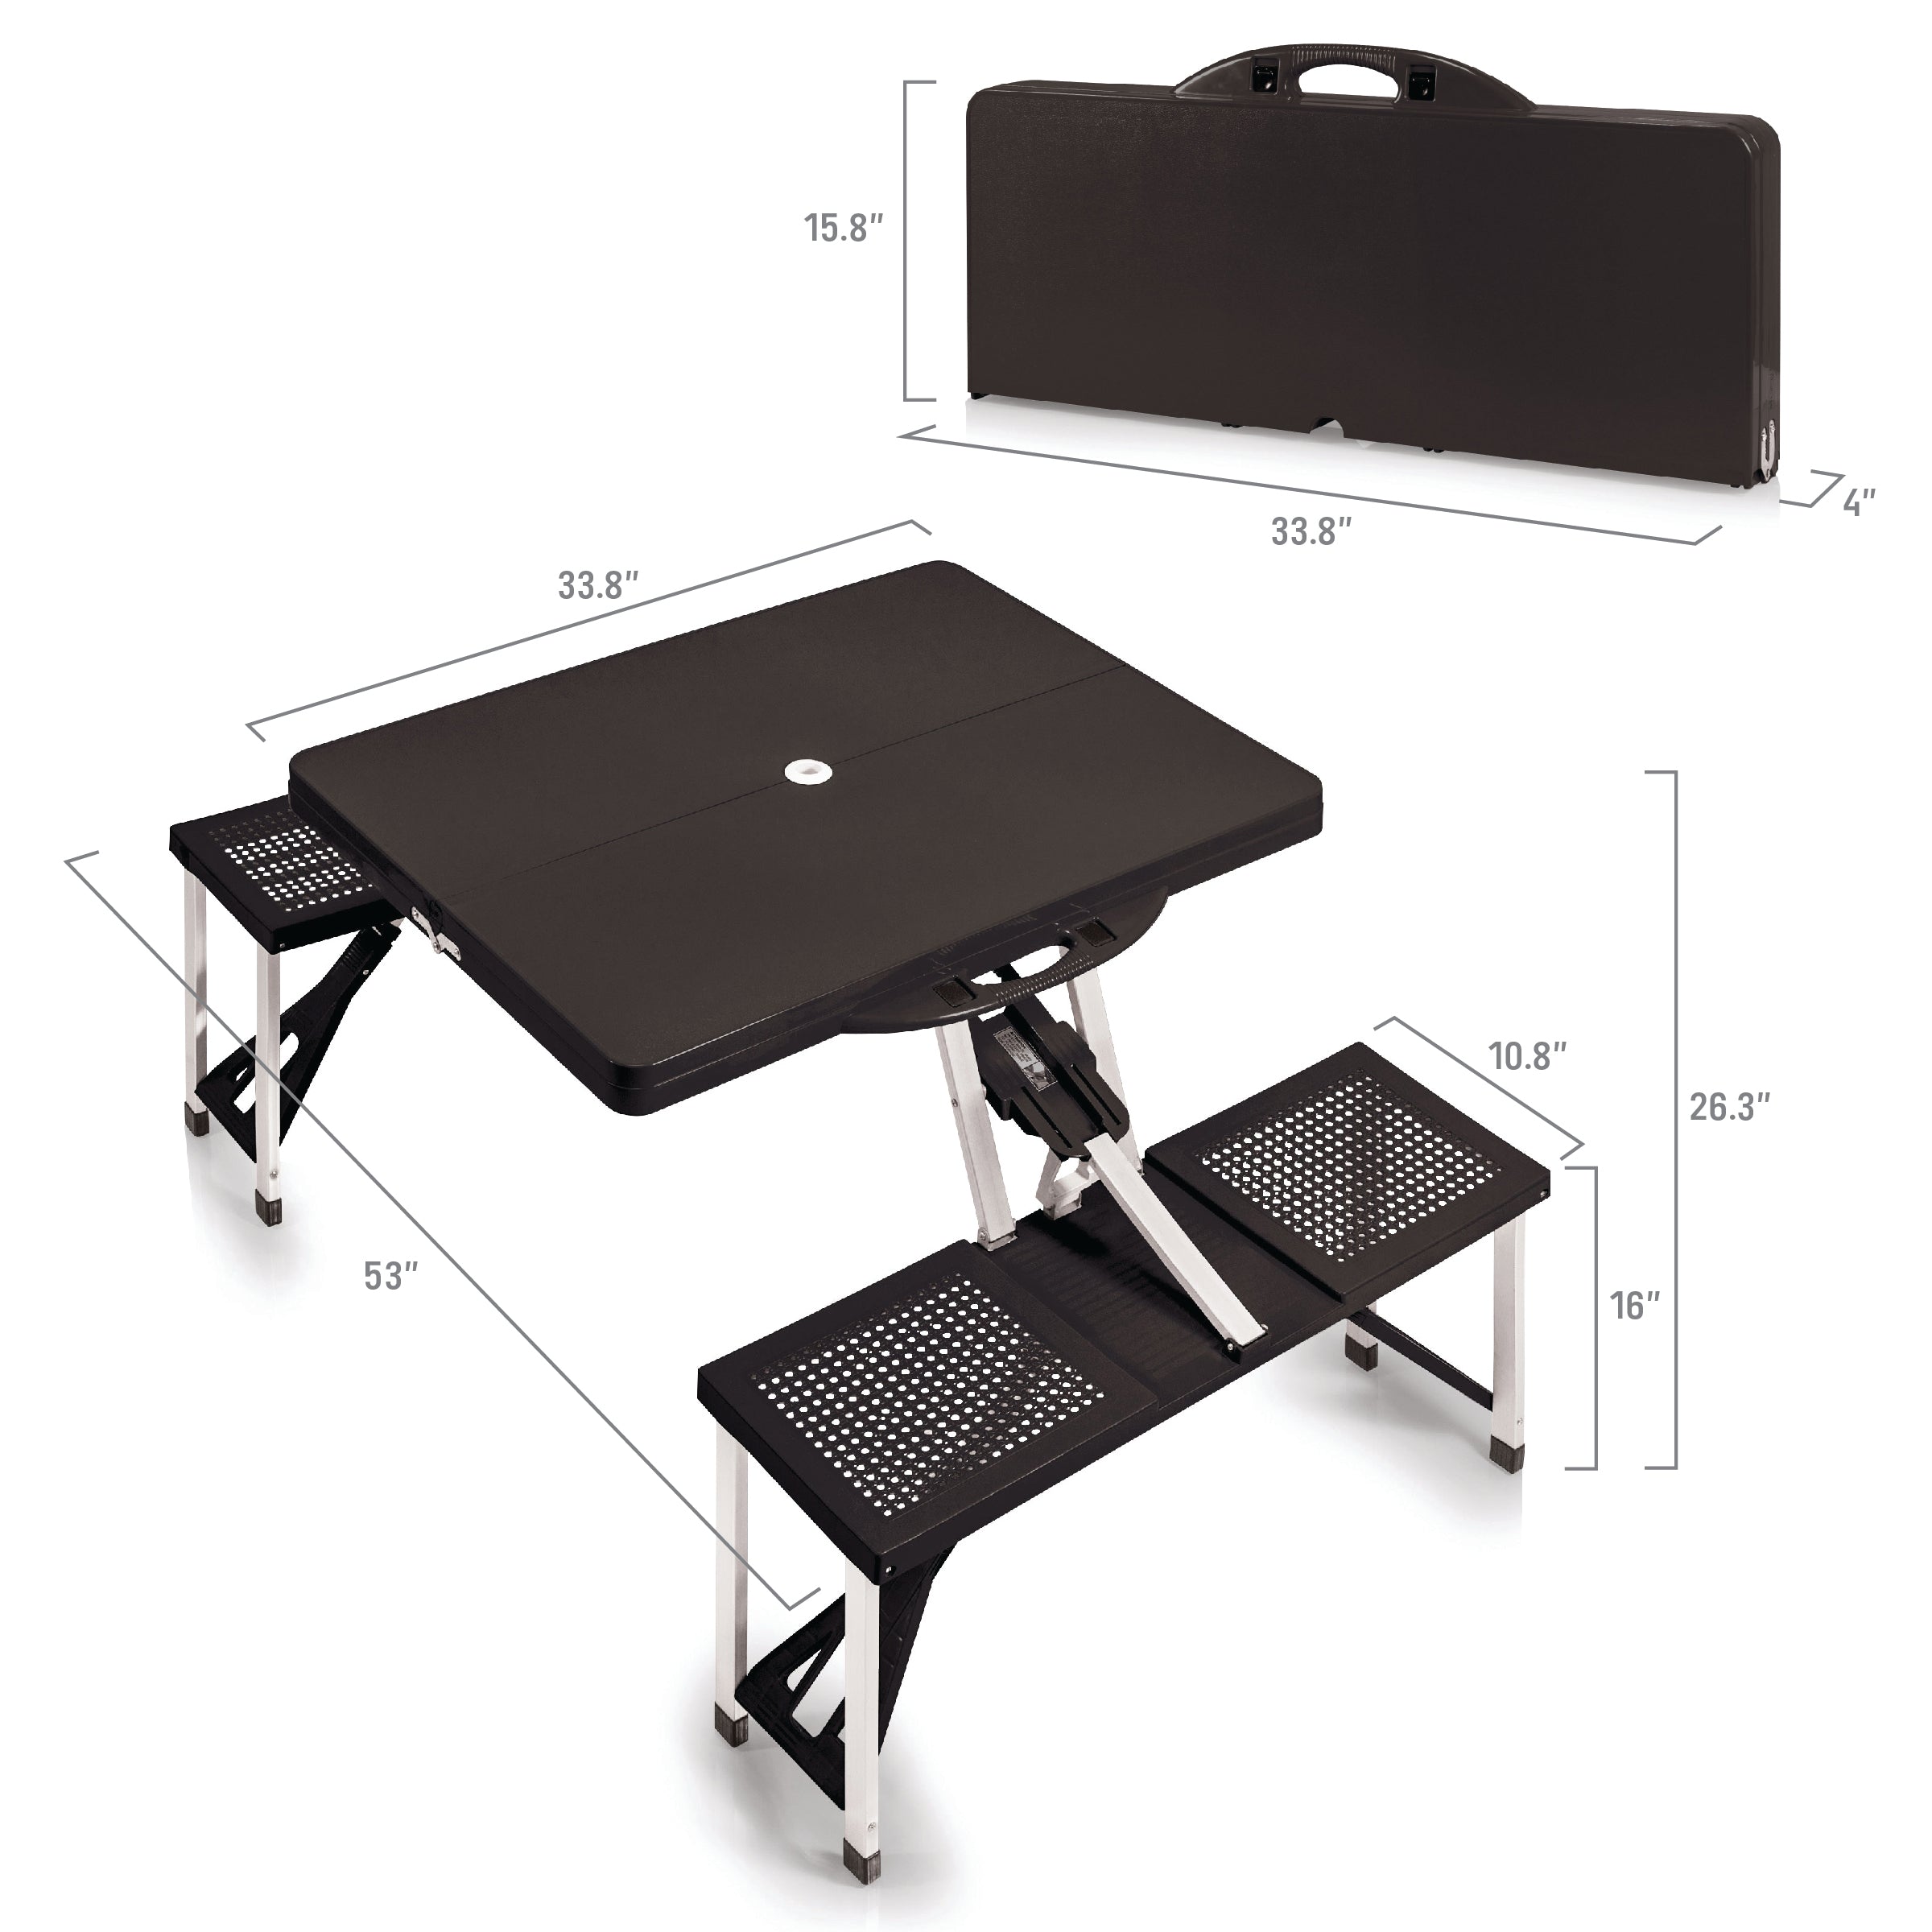 Baseball Diamond - Baltimore Orioles - Picnic Table Portable Folding Table with Seats